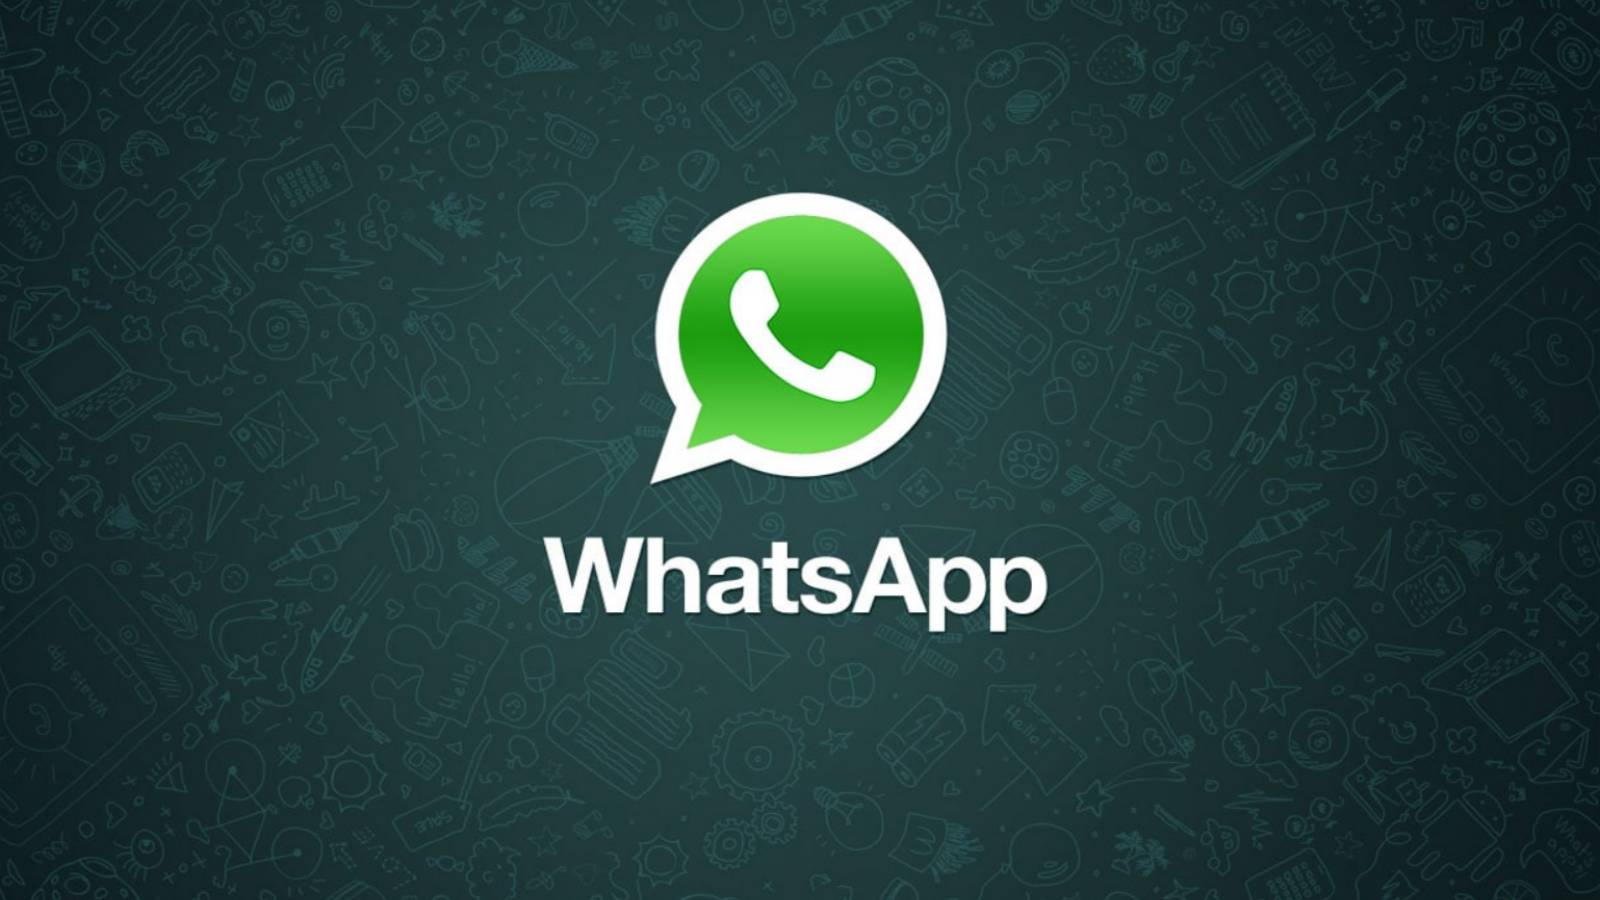 WhatsApp HIDDEN Surprise Revealed Users